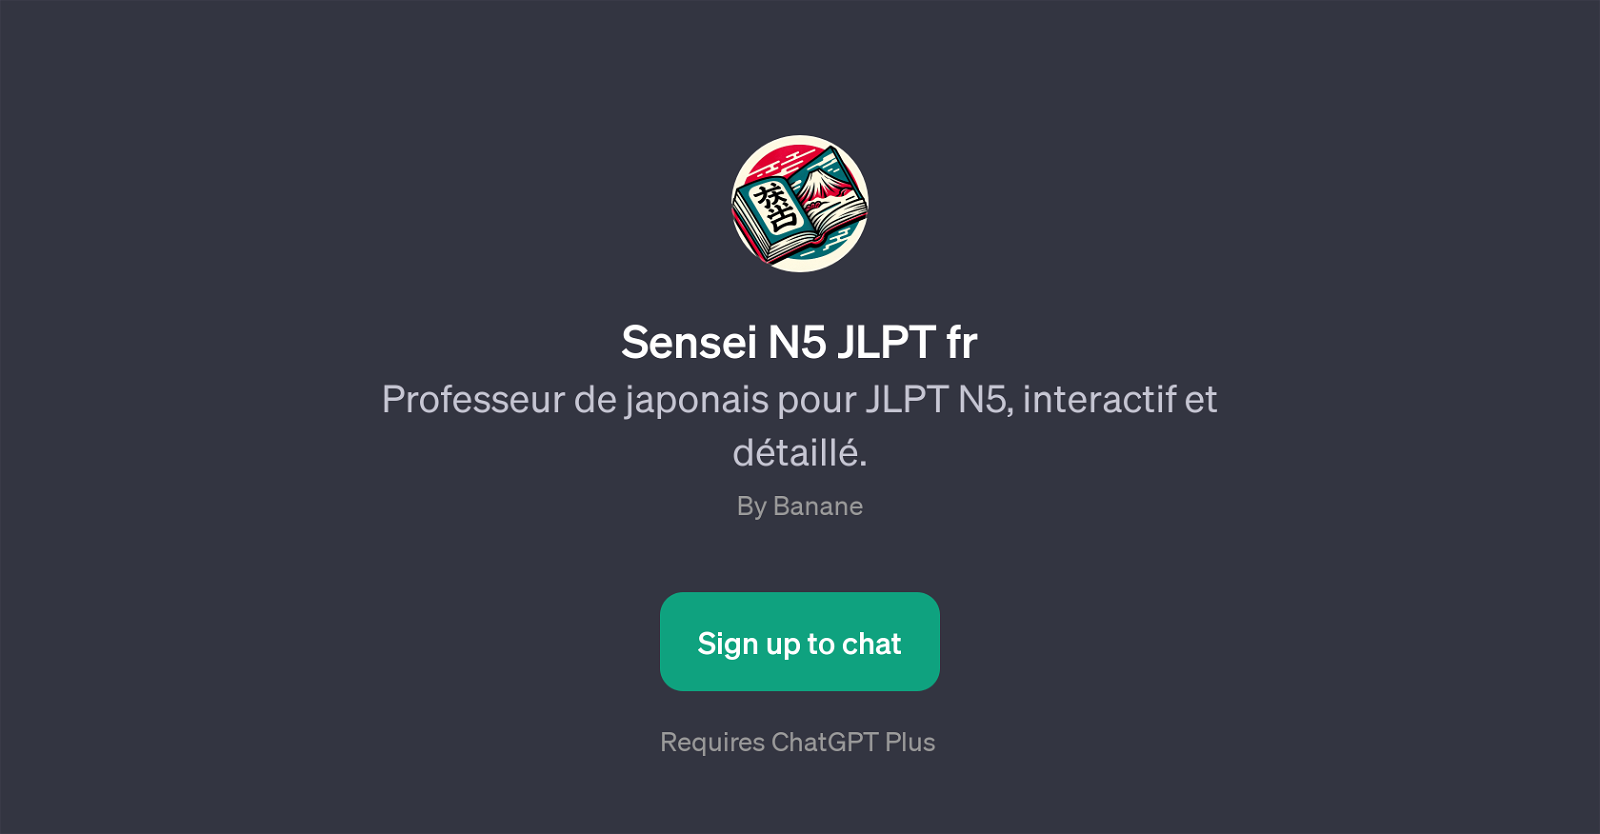 Sensei N5 JLPT fr website